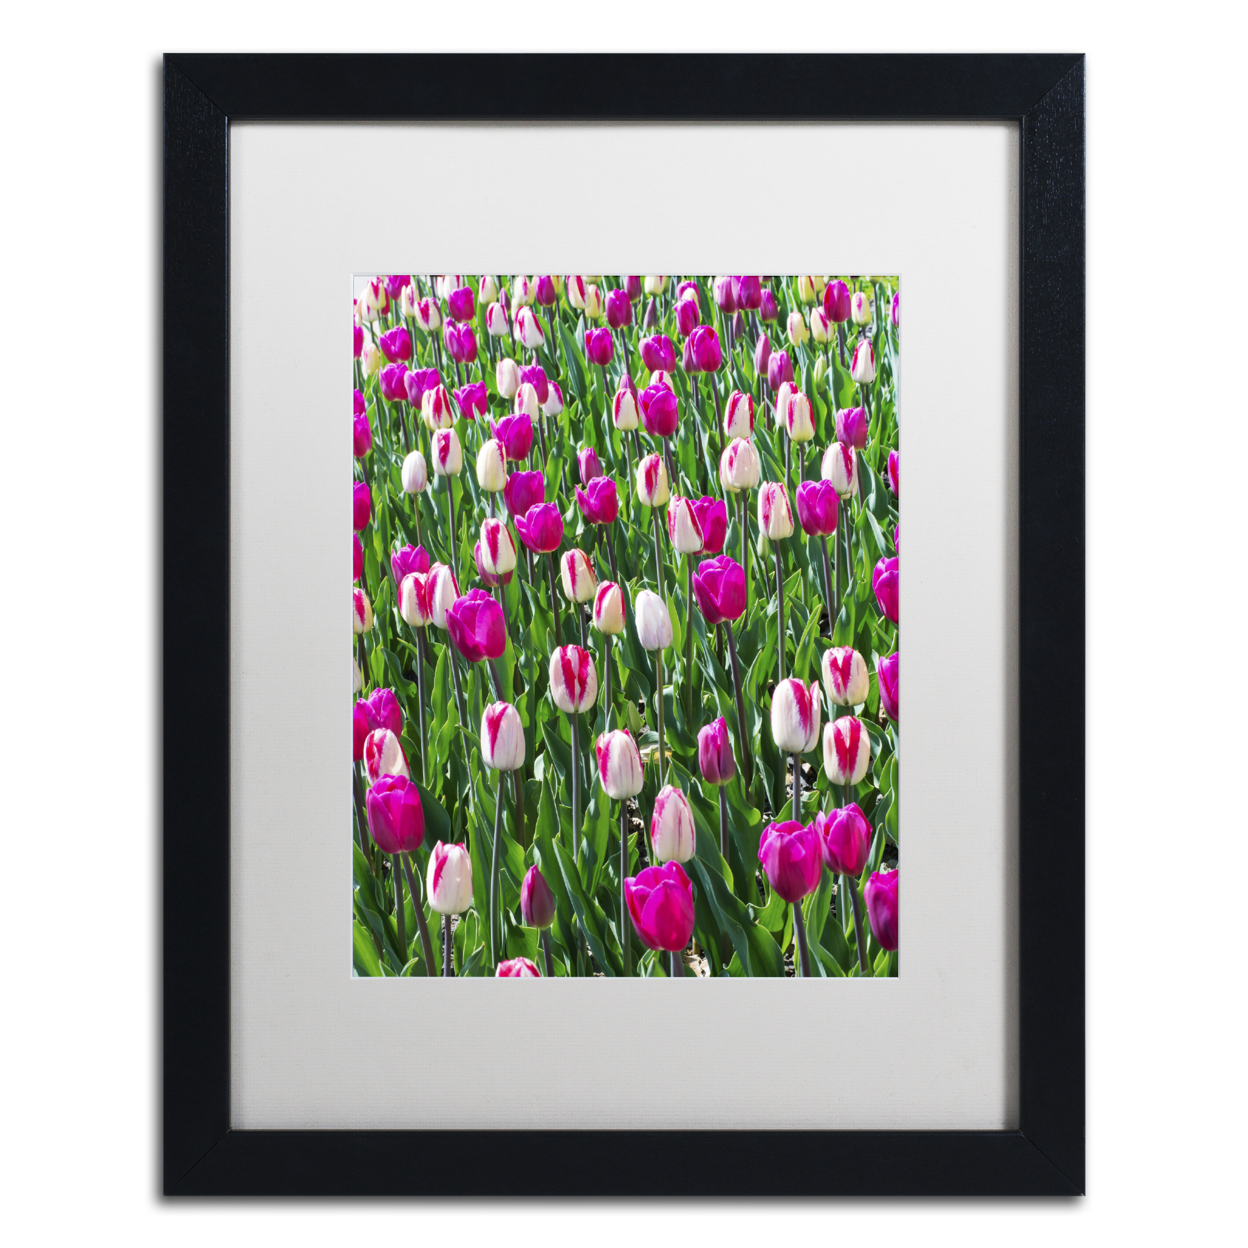 Kurt Shaffer 'Tulips' Black Wooden Framed Art 18 X 22 Inches